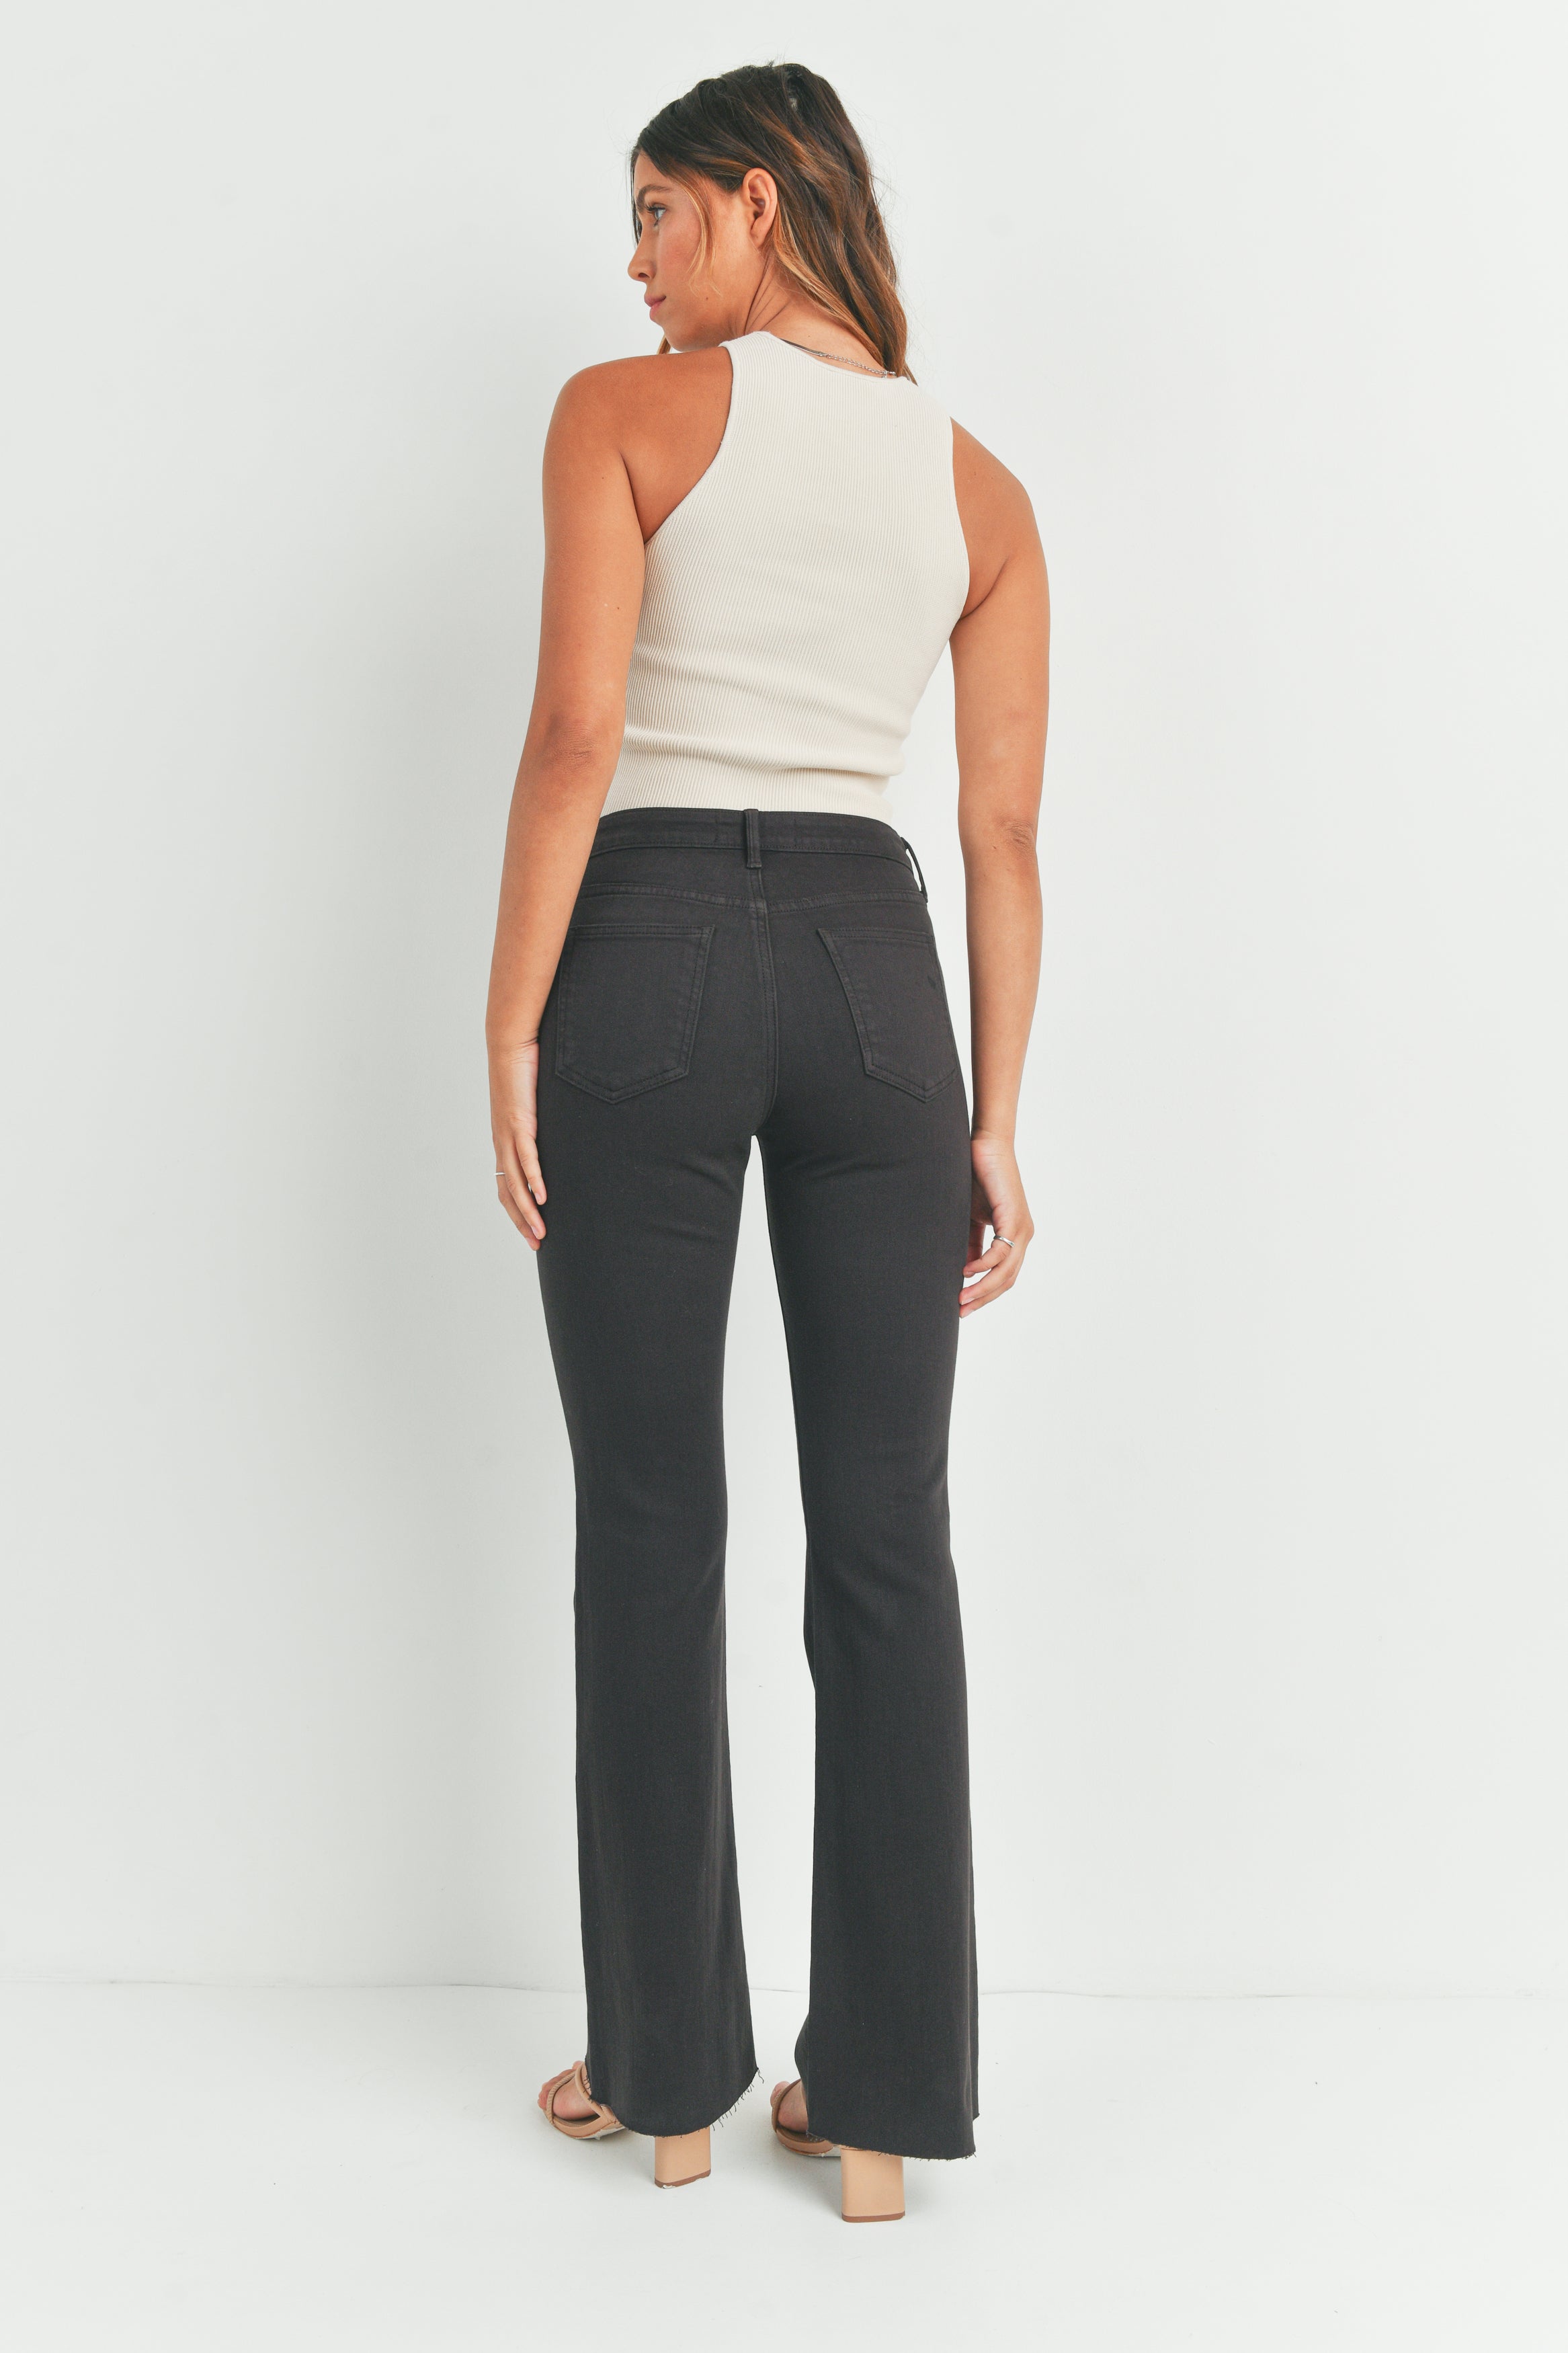 Unpublished Marlow Black Coated - Denim Jeans - Cropped Flare - Lulus